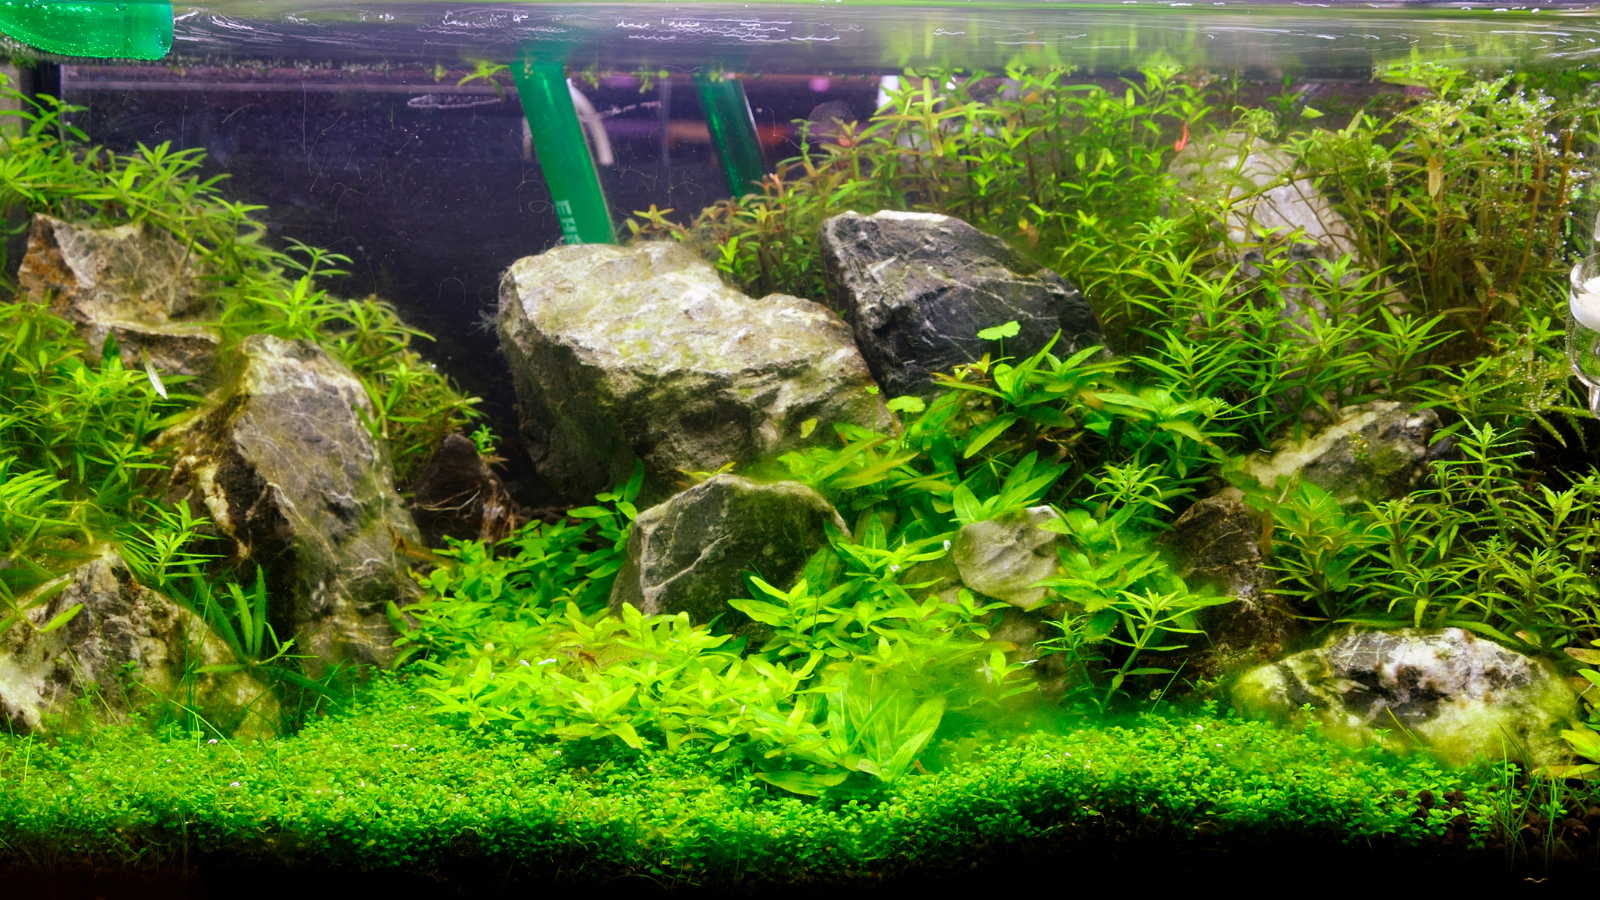 Engrais aquarium pour bacs plantes aqua-mio: Quelques aquarium des clients  Aquamio